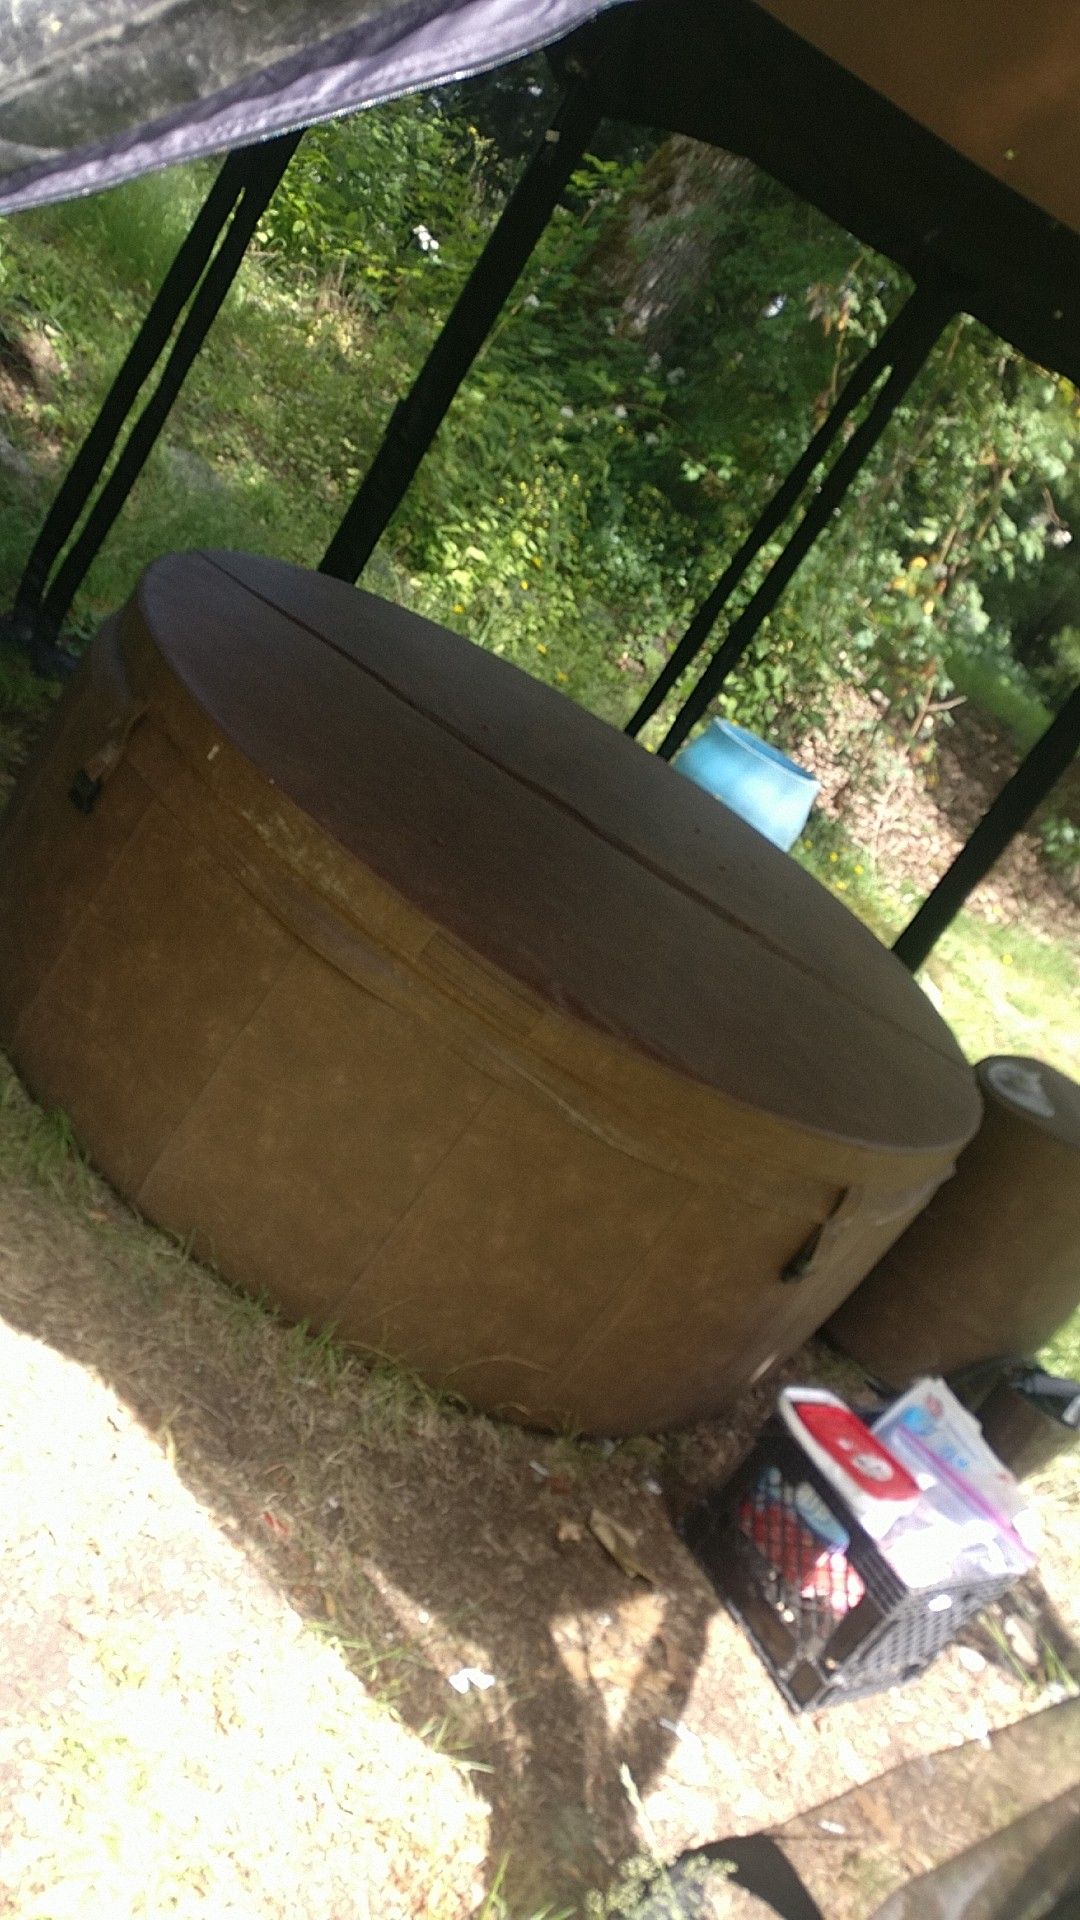 Softub portable hot tub with gazebo